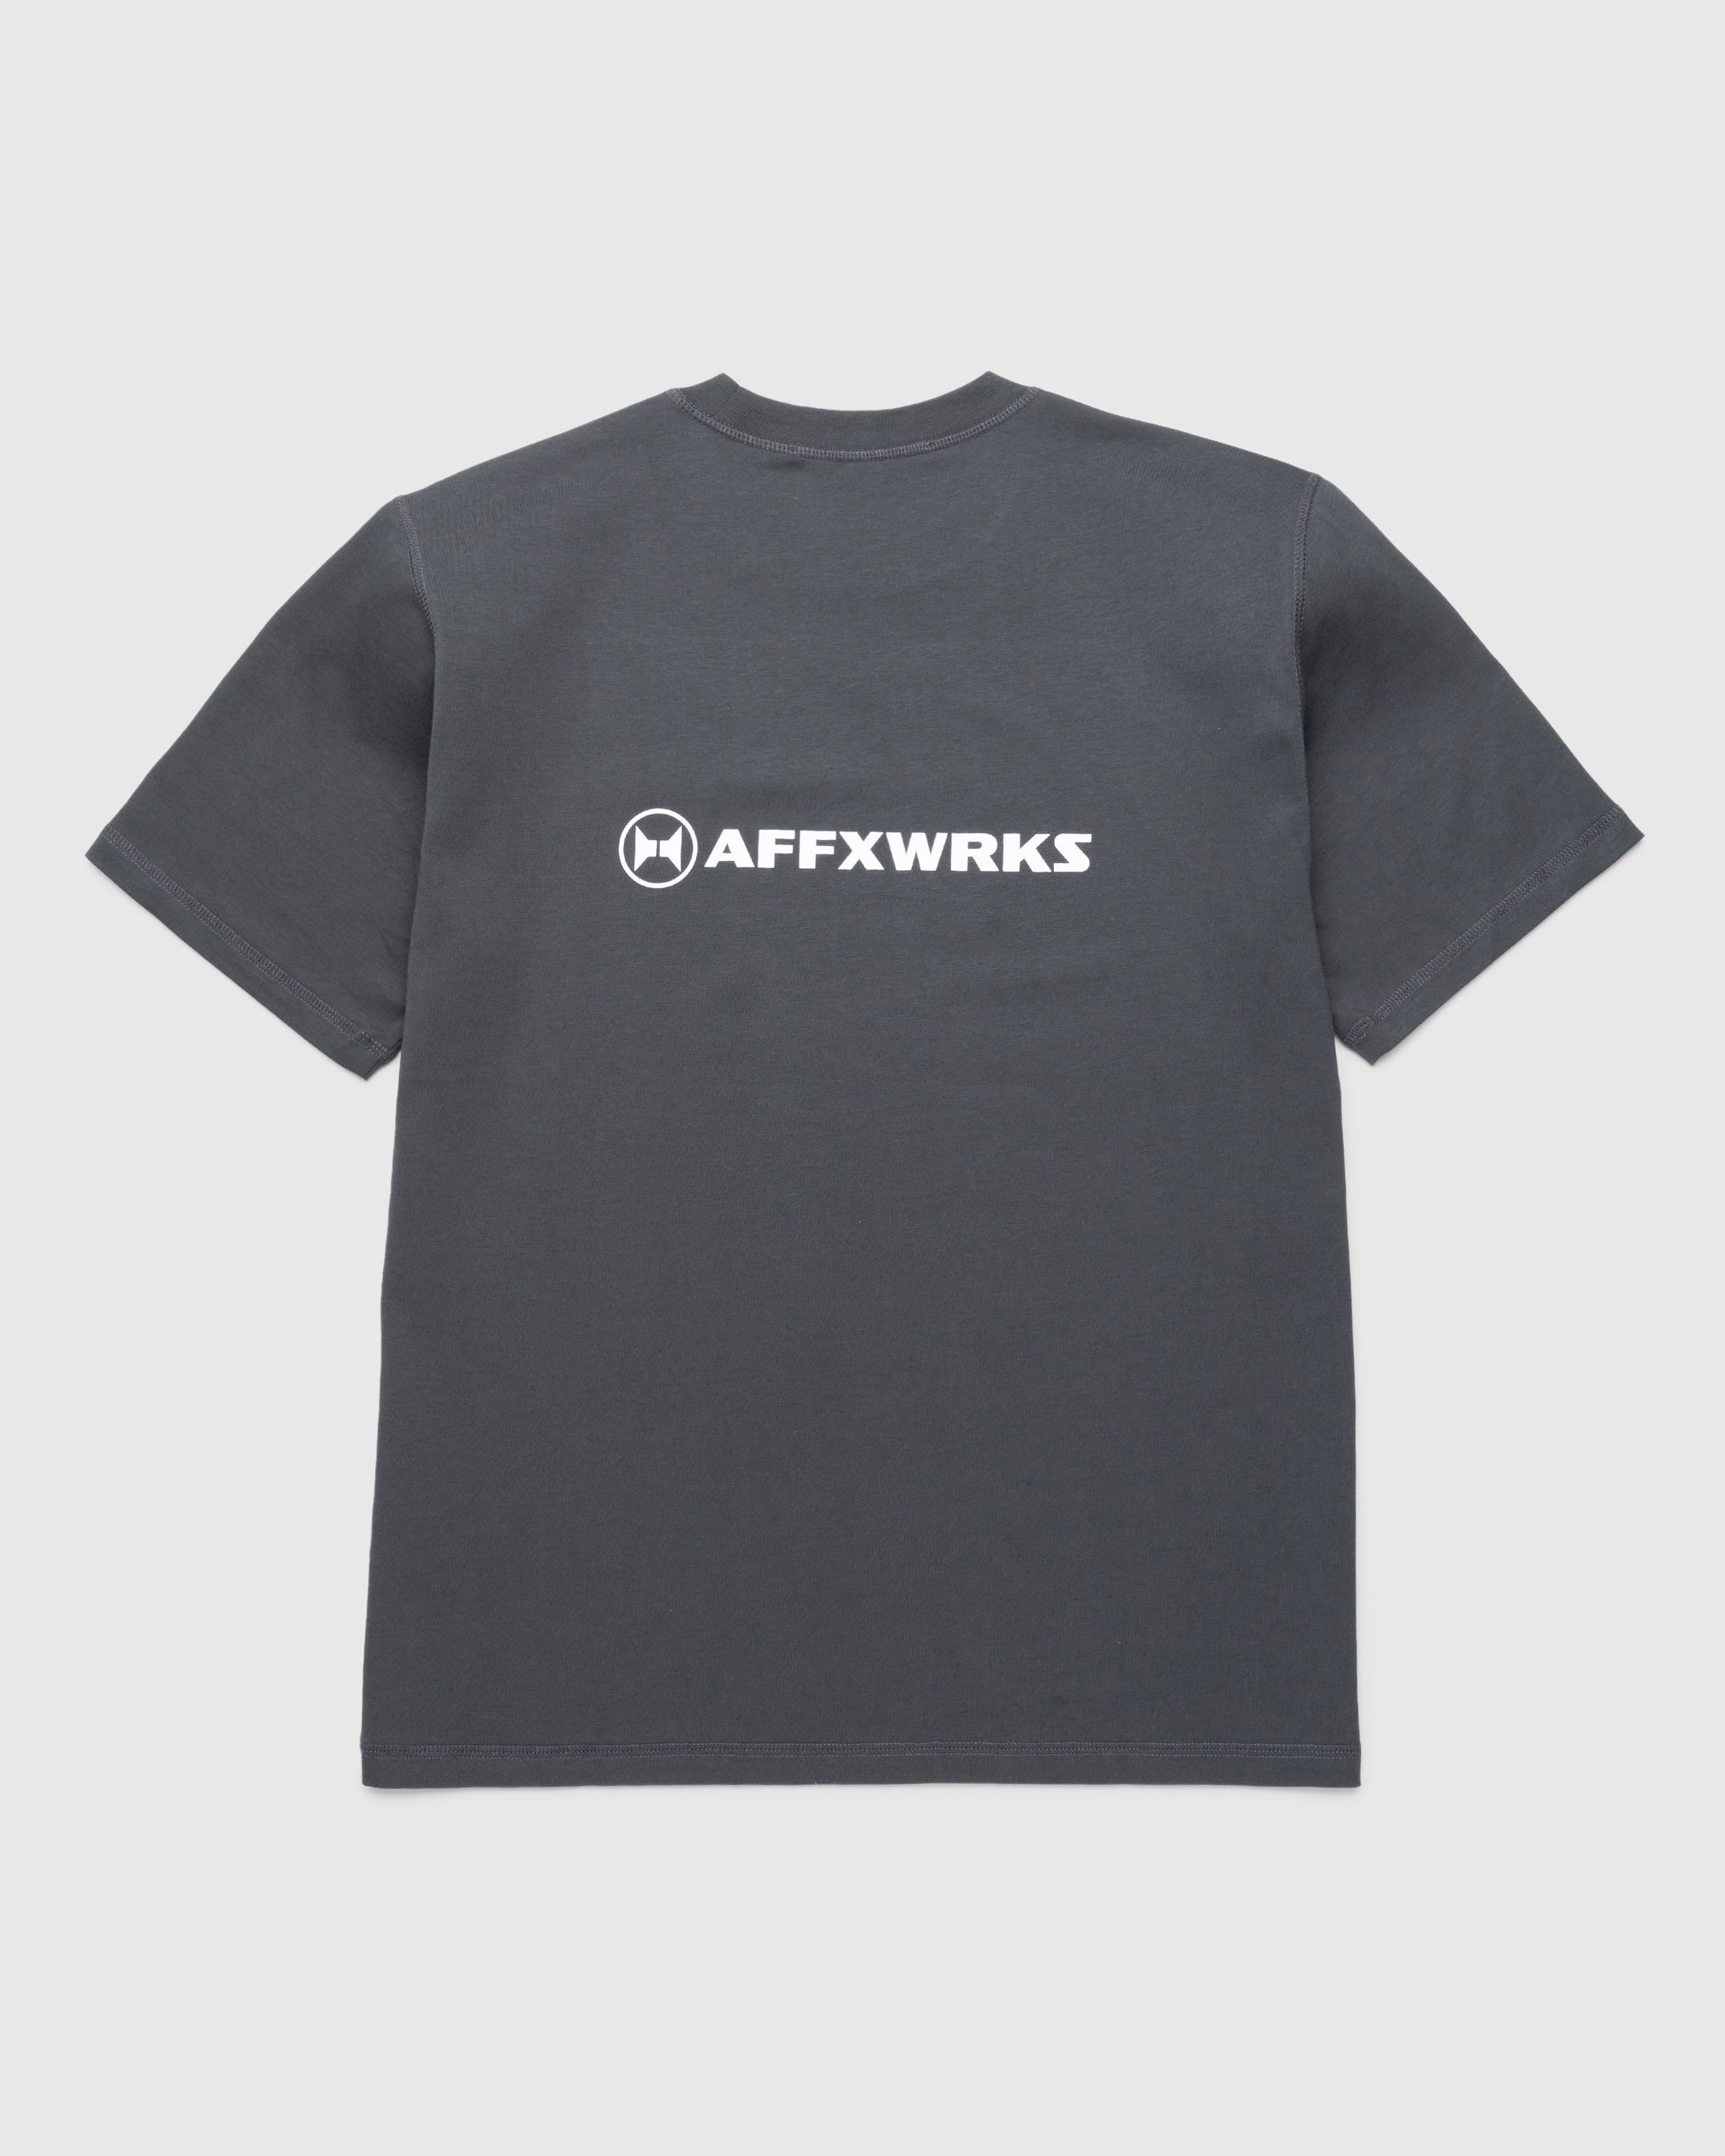 AFFXWRKS – AFFXWRKS T-SHIRT | Shop Highsnobiety